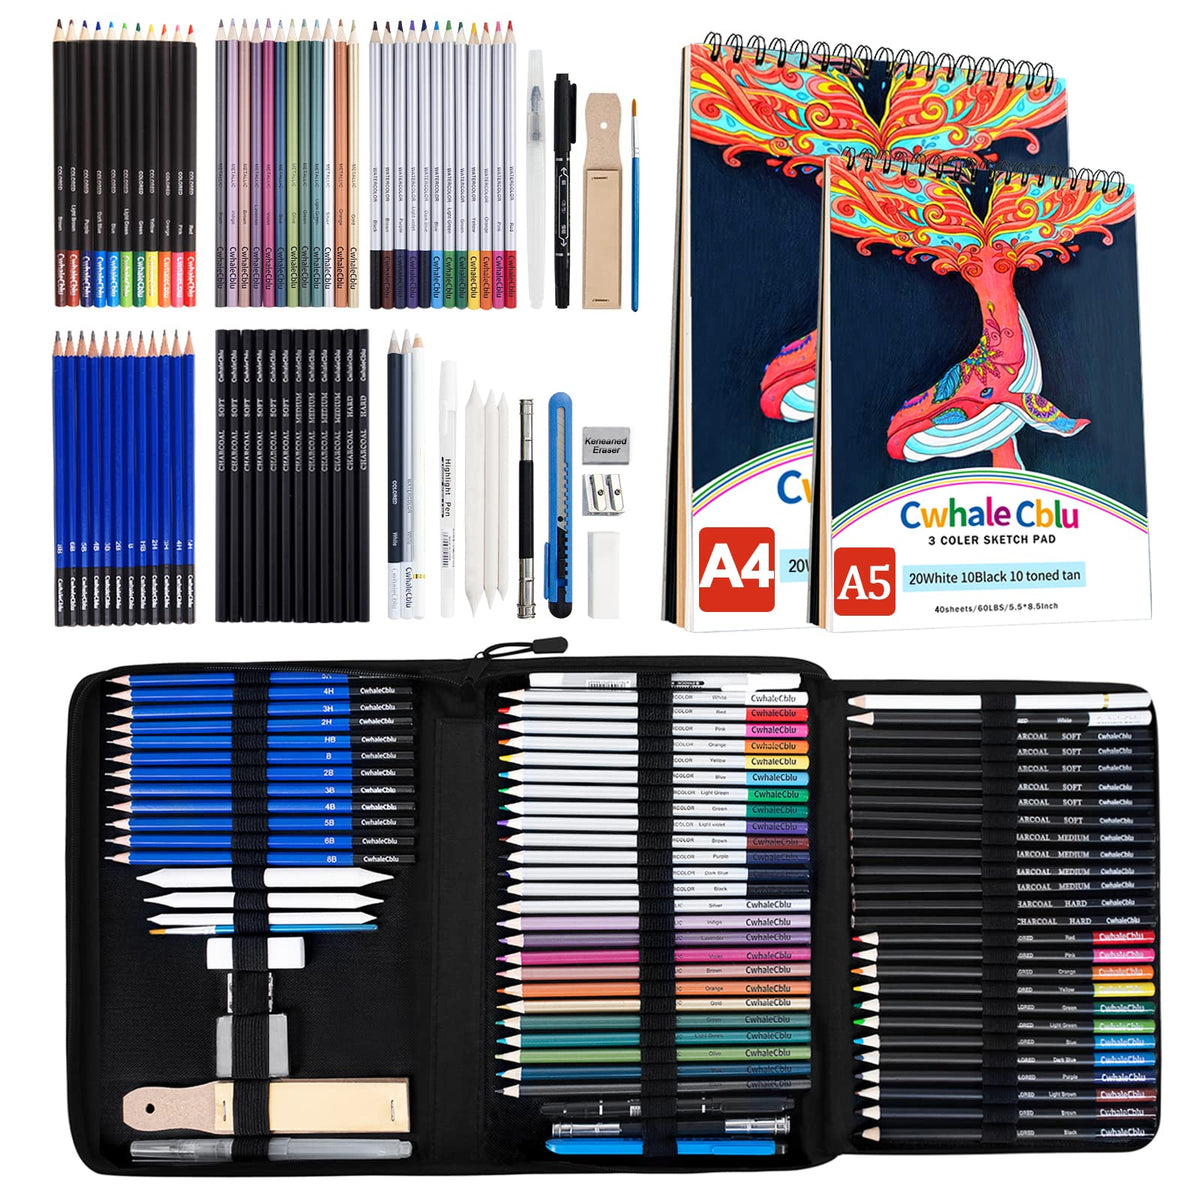 Artownlar artownlar 72 pack drawing sketching set with 8x11 sketchbook, pro art supplies kit for artist adults teens beginners